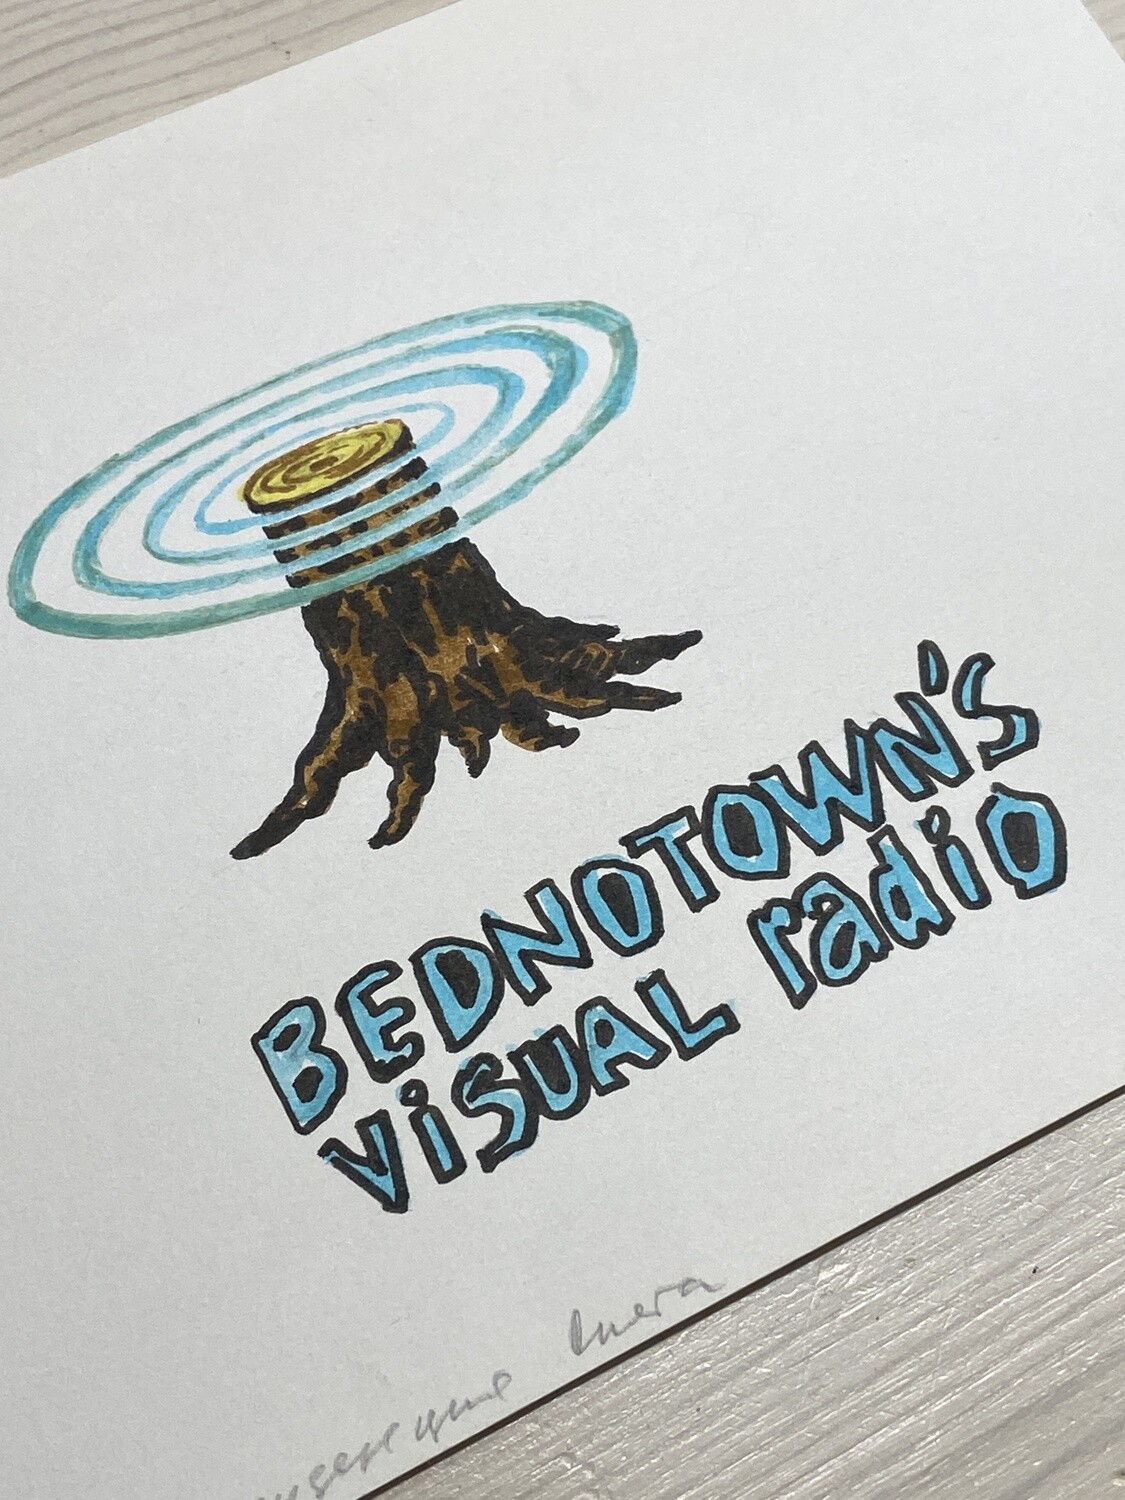 "Bednotown Visual Radio"